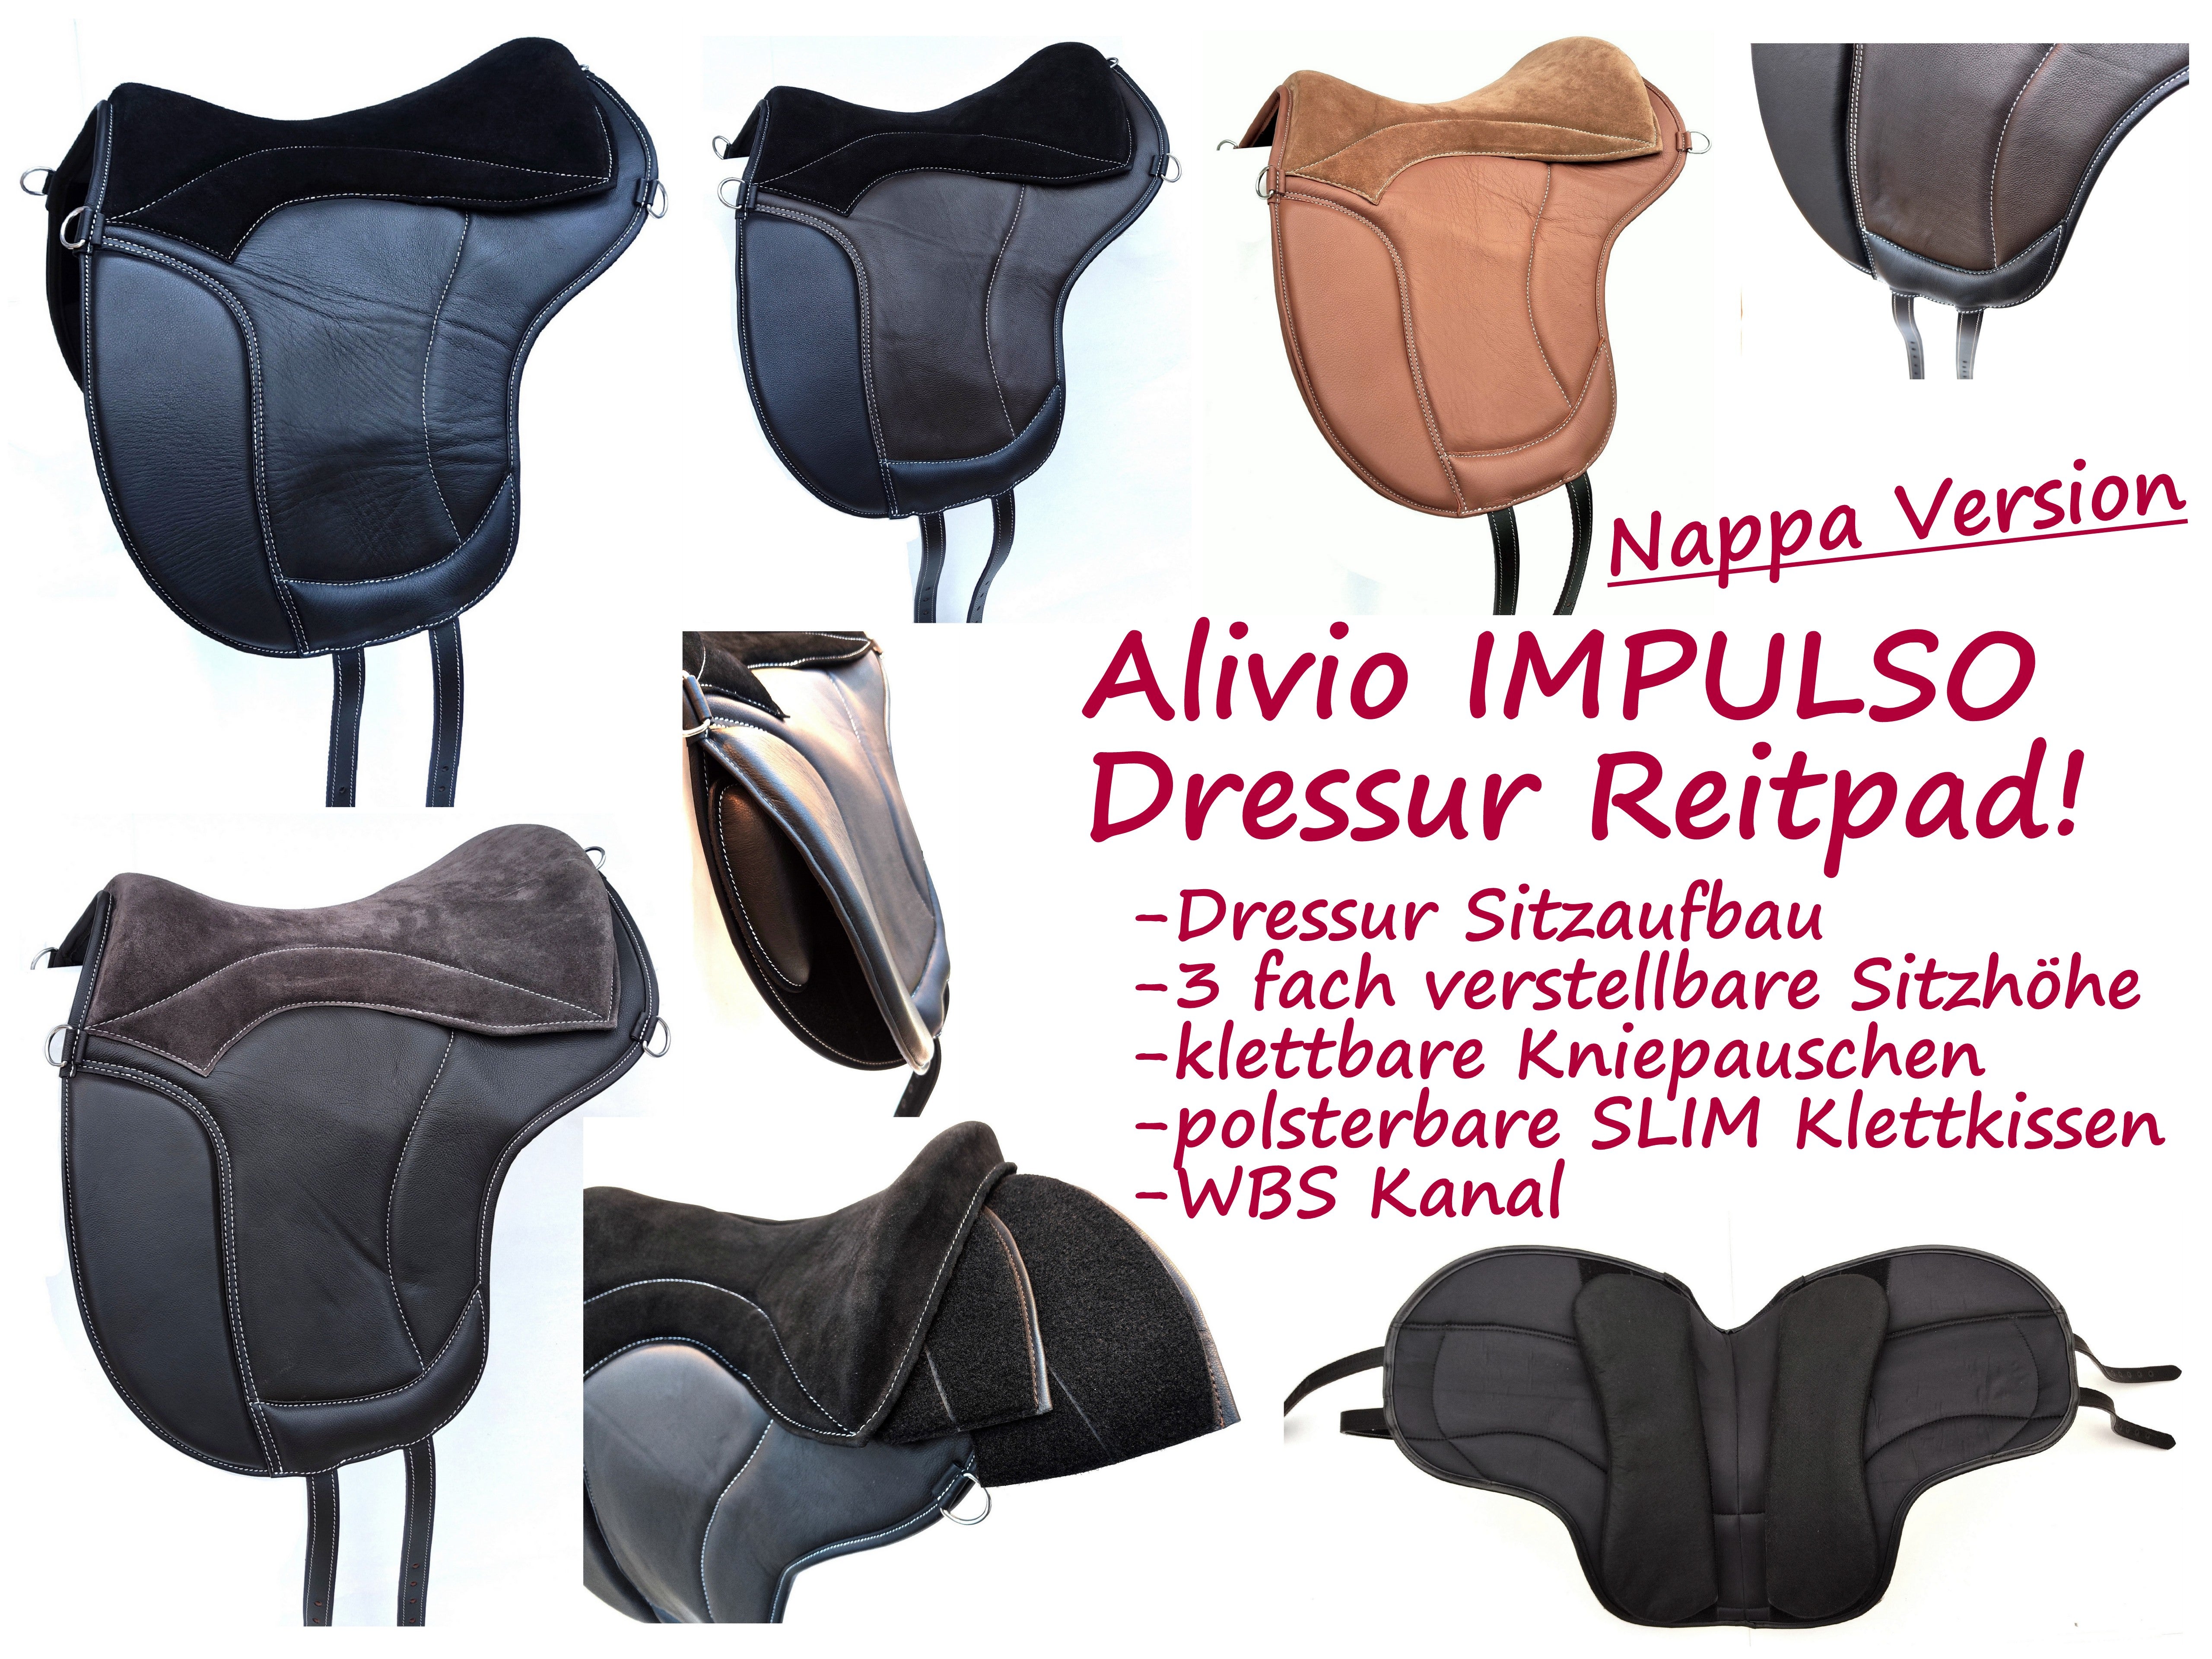 "ALIVIO IMPULSO" NAPPALEDER dressage riding pad - WBS channel - SLIM felt cushion - knee blocks